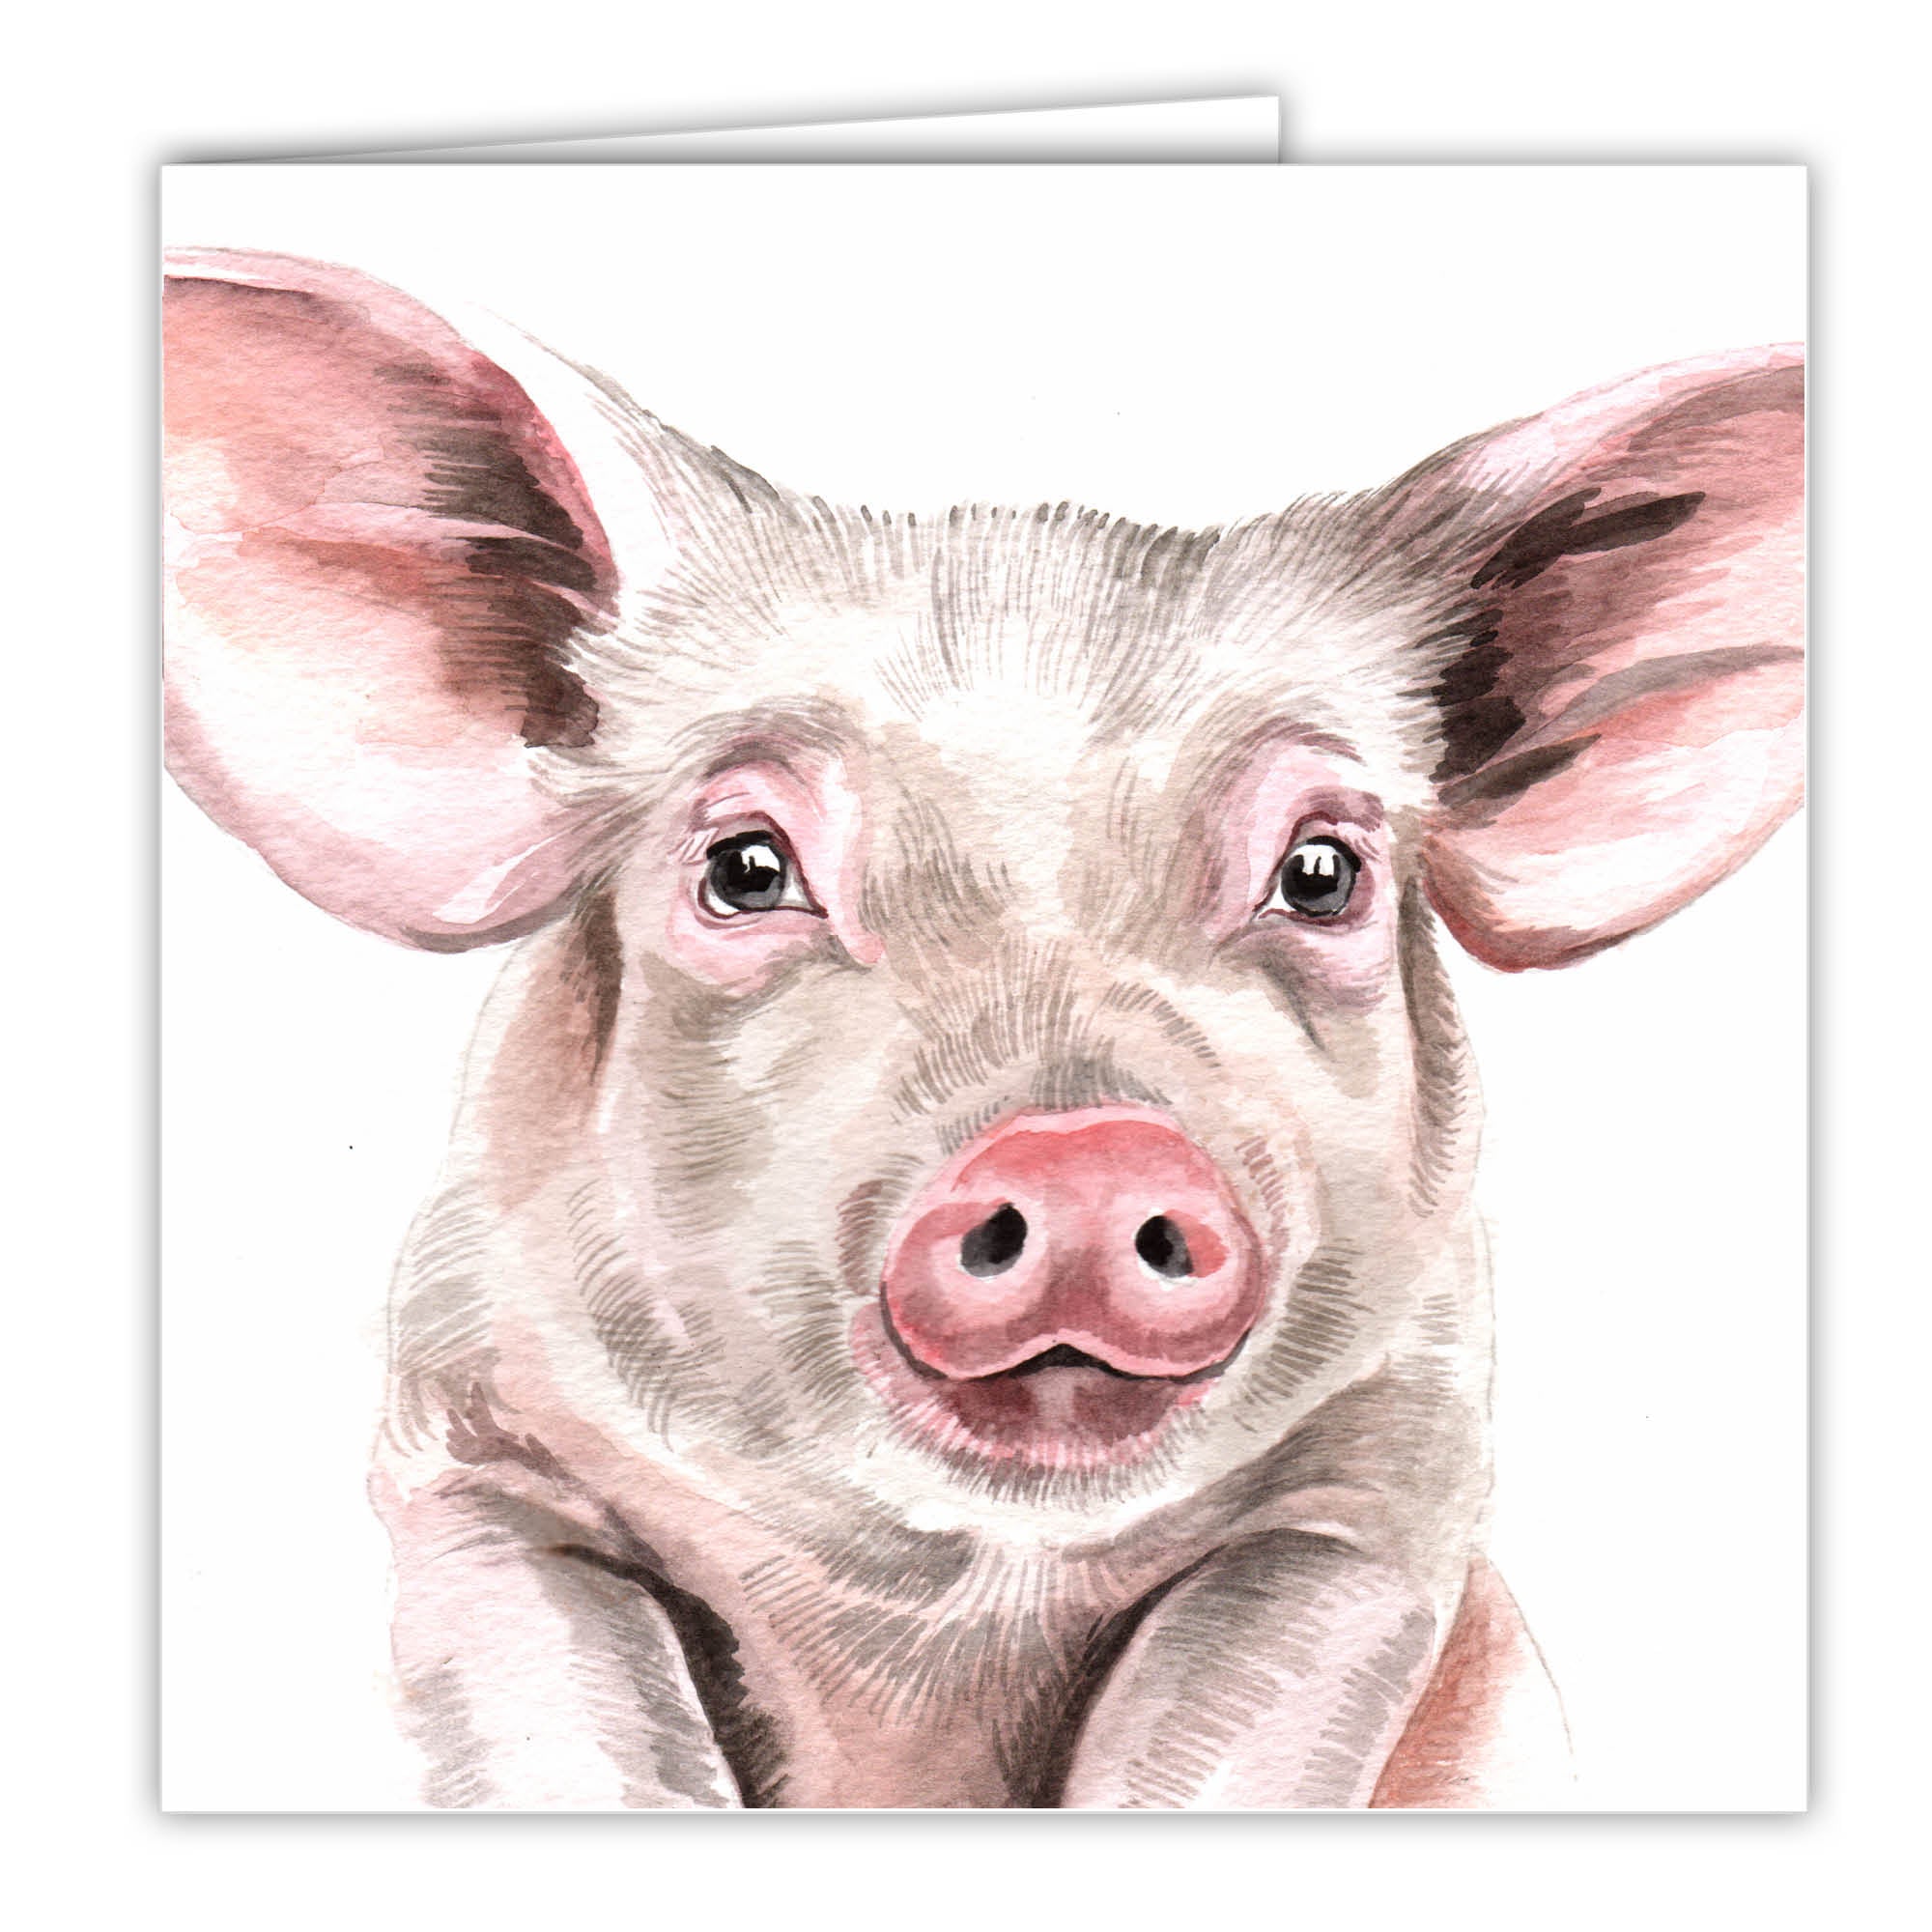 Pig Card